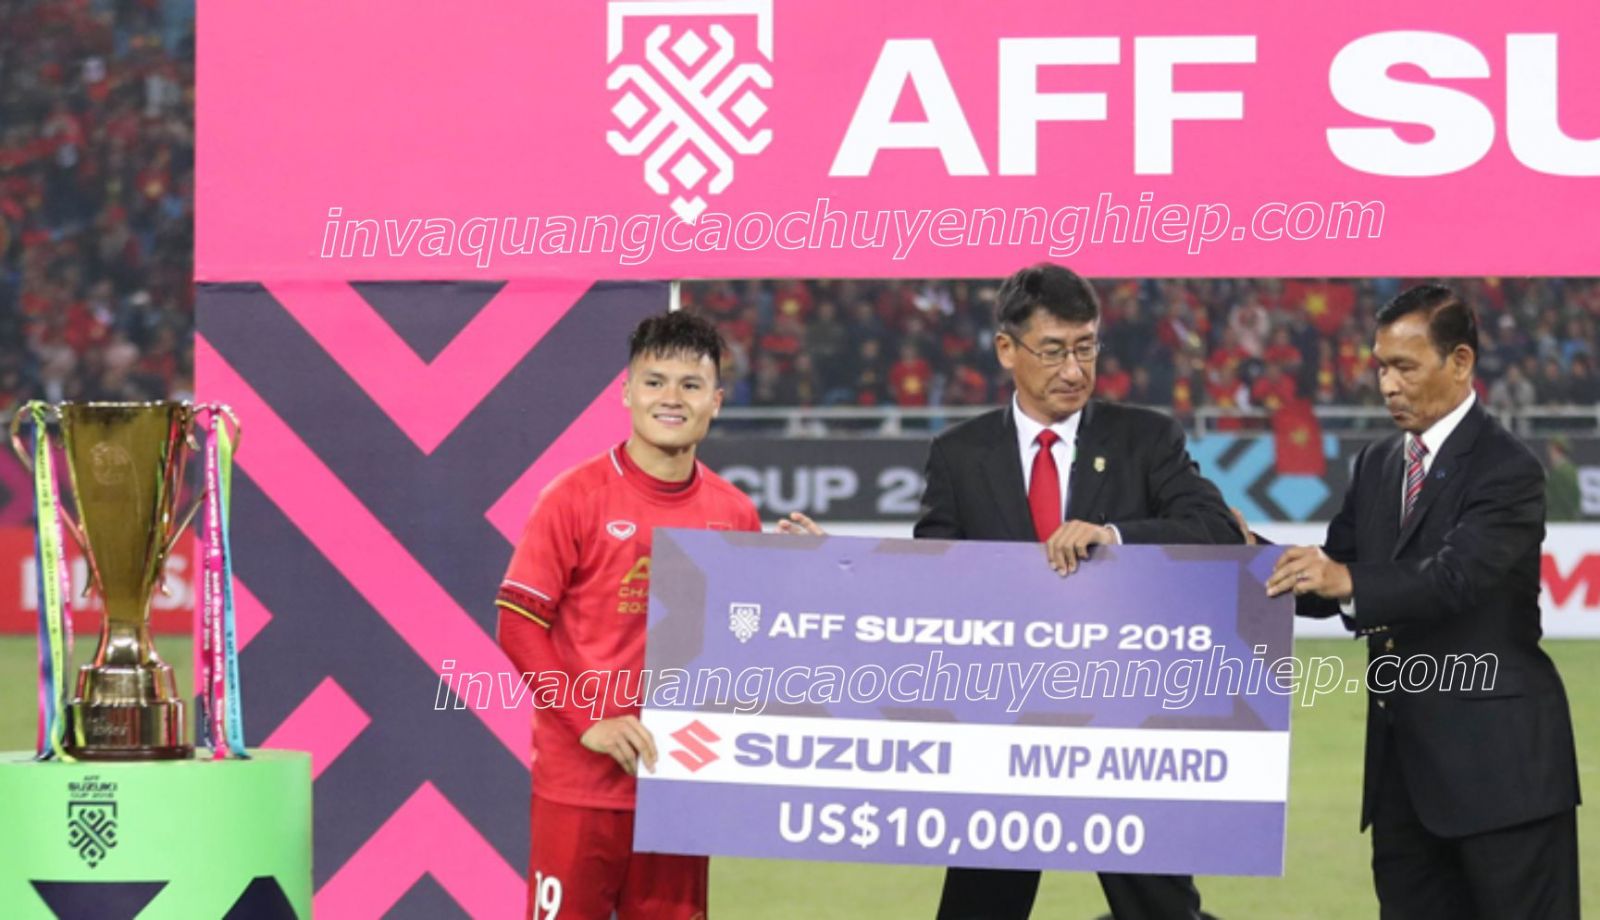 bảng trao giải thưởng suzuki cup 2018 in decal pp bồi formex